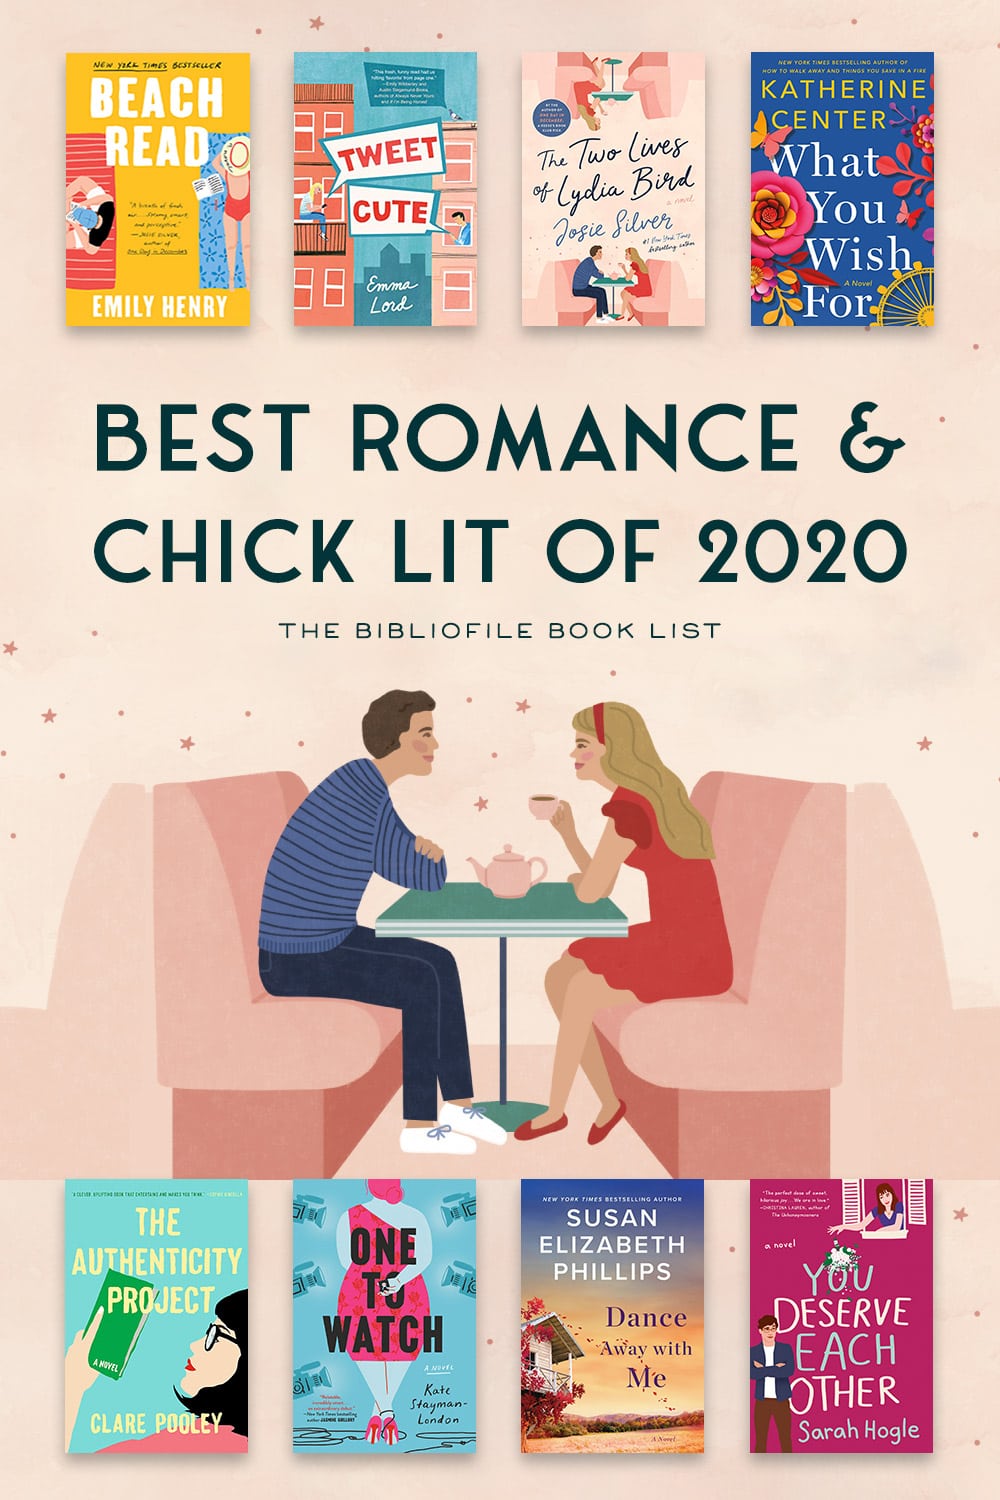 20 Best Romance & Chick Lit Books of 2020 The Bibliofile